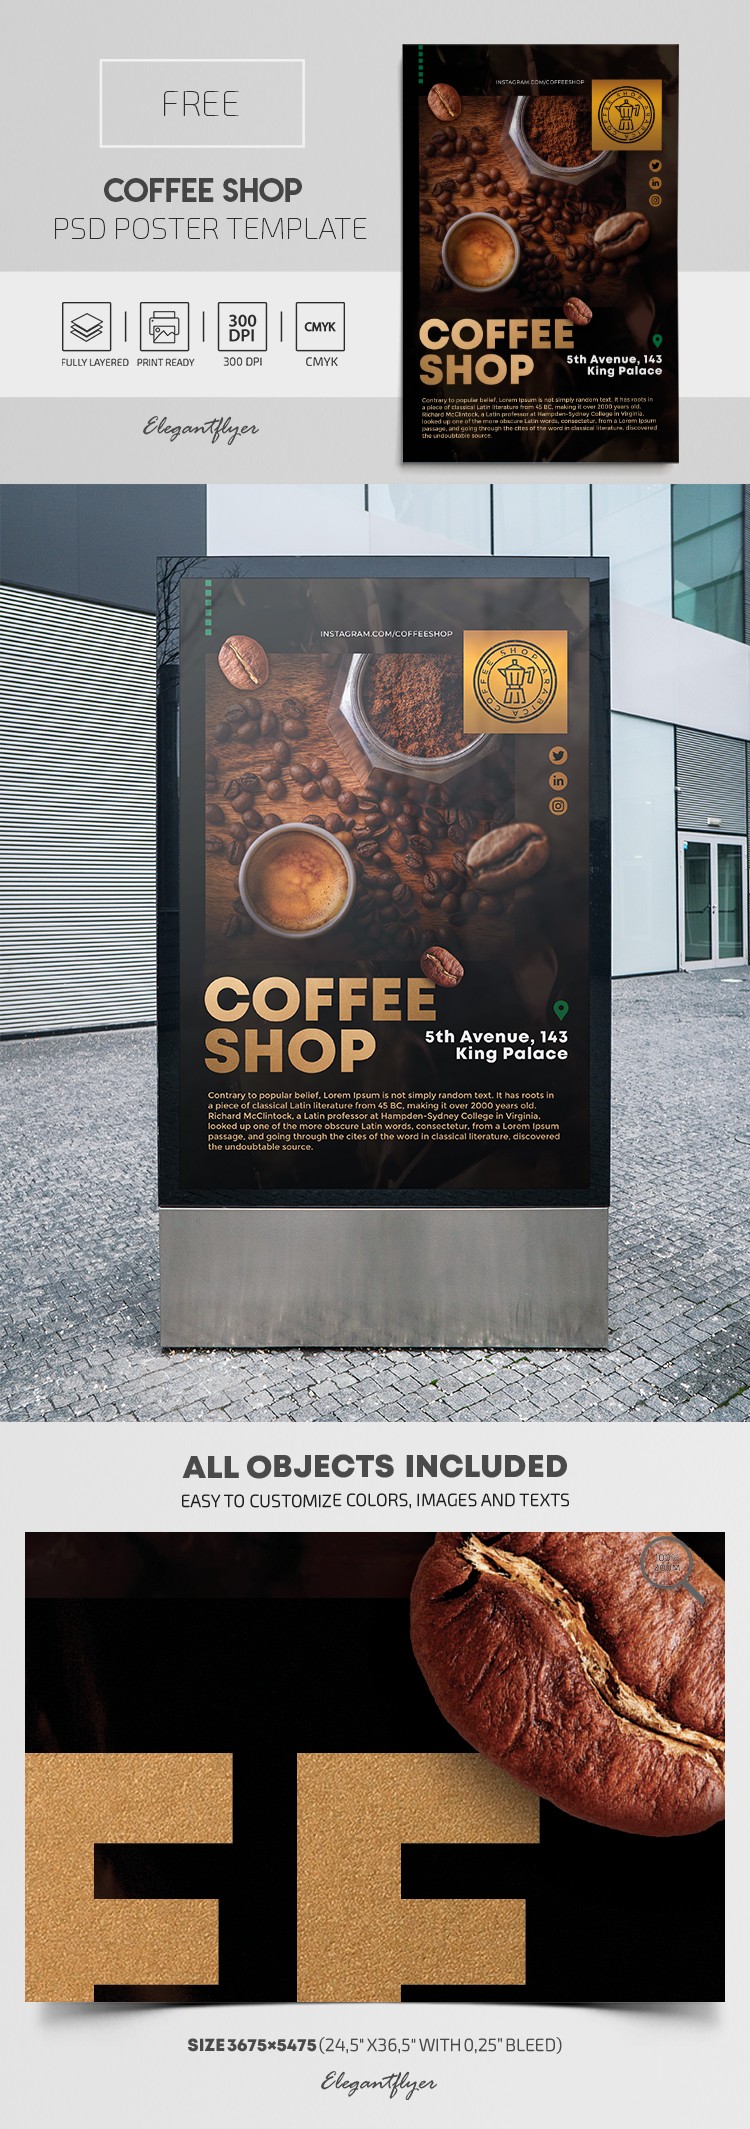 Coffee Shop Poster by ElegantFlyer